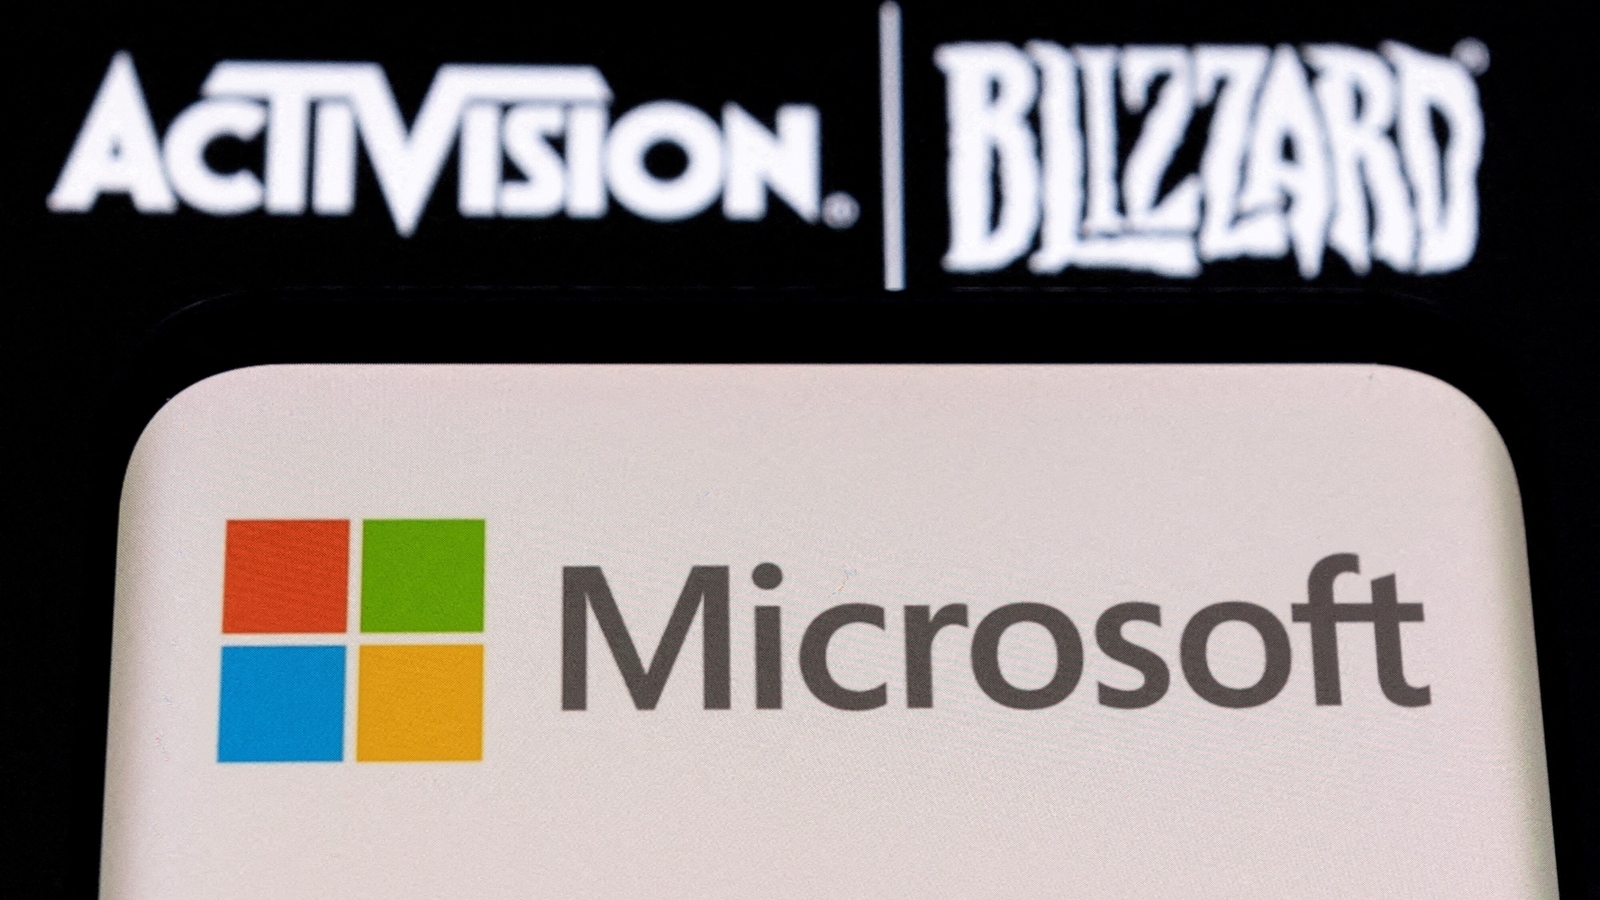 Activision (ATVI) Risk-Reward Tradeoff Defies Microsoft Deal Doubt